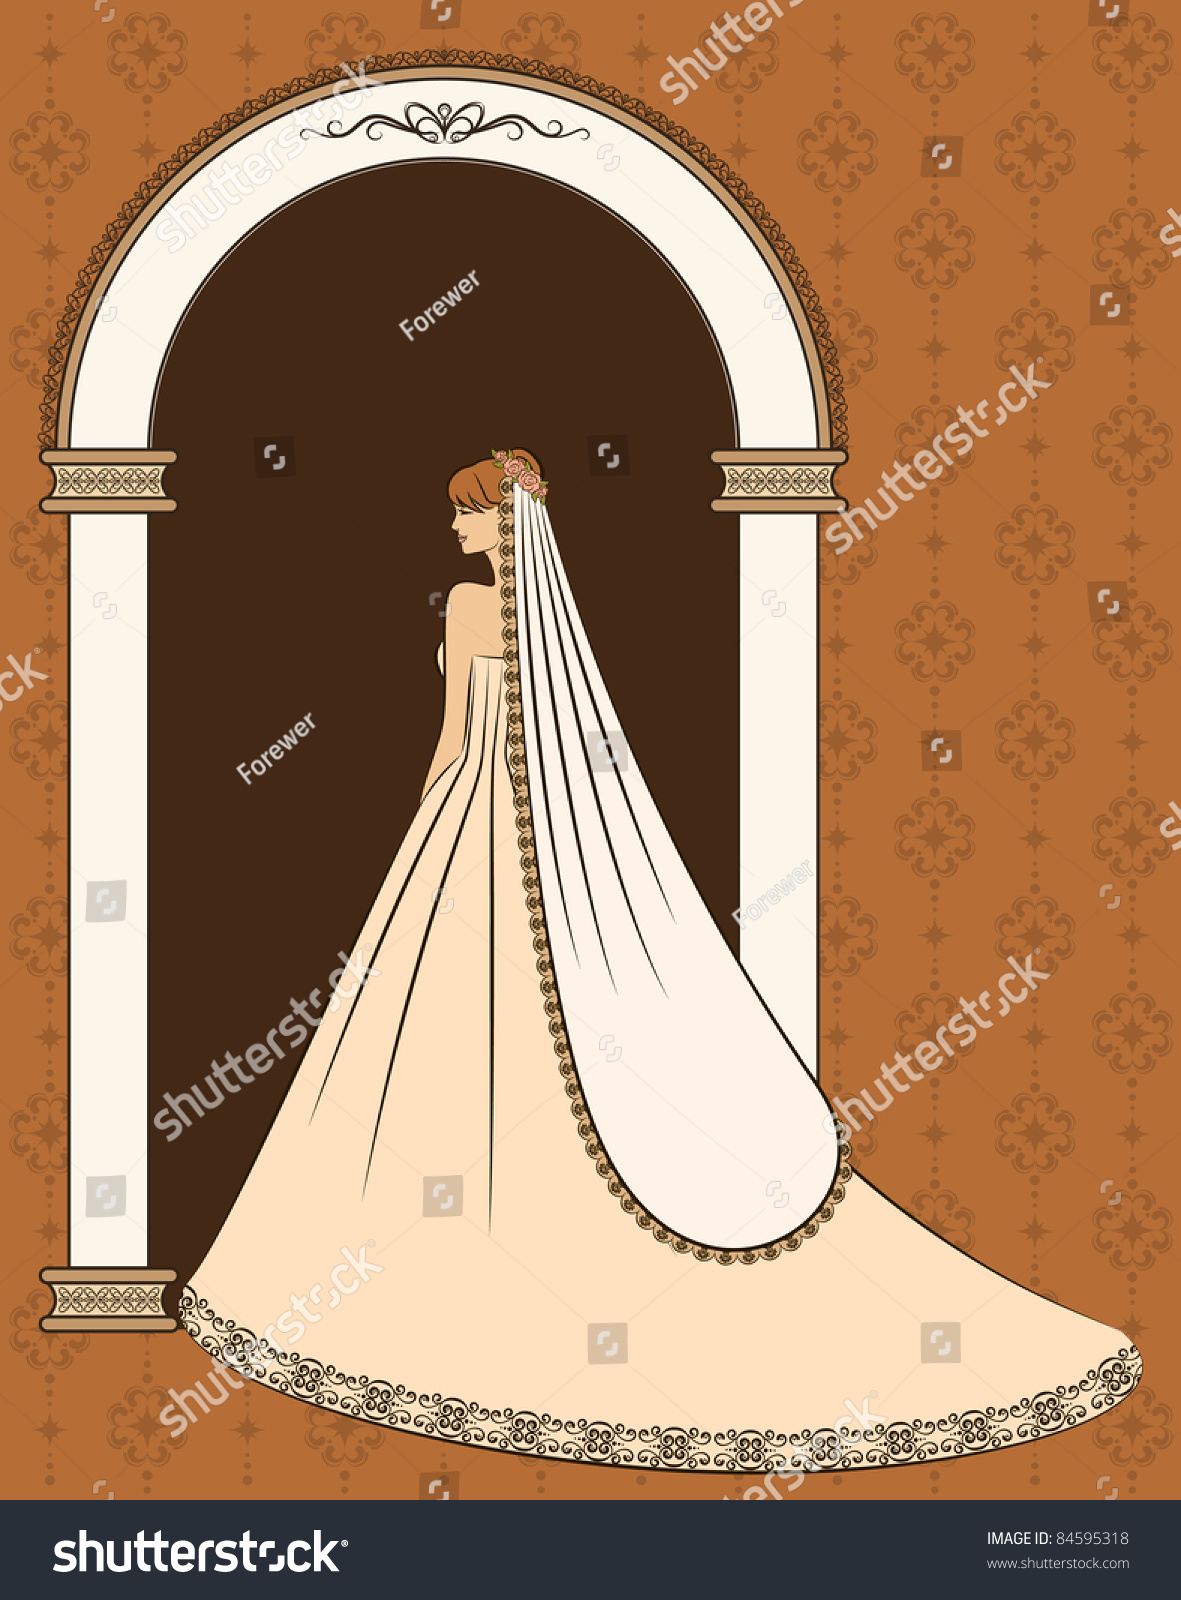 Beautiful Bride Photos Shutterstock 36